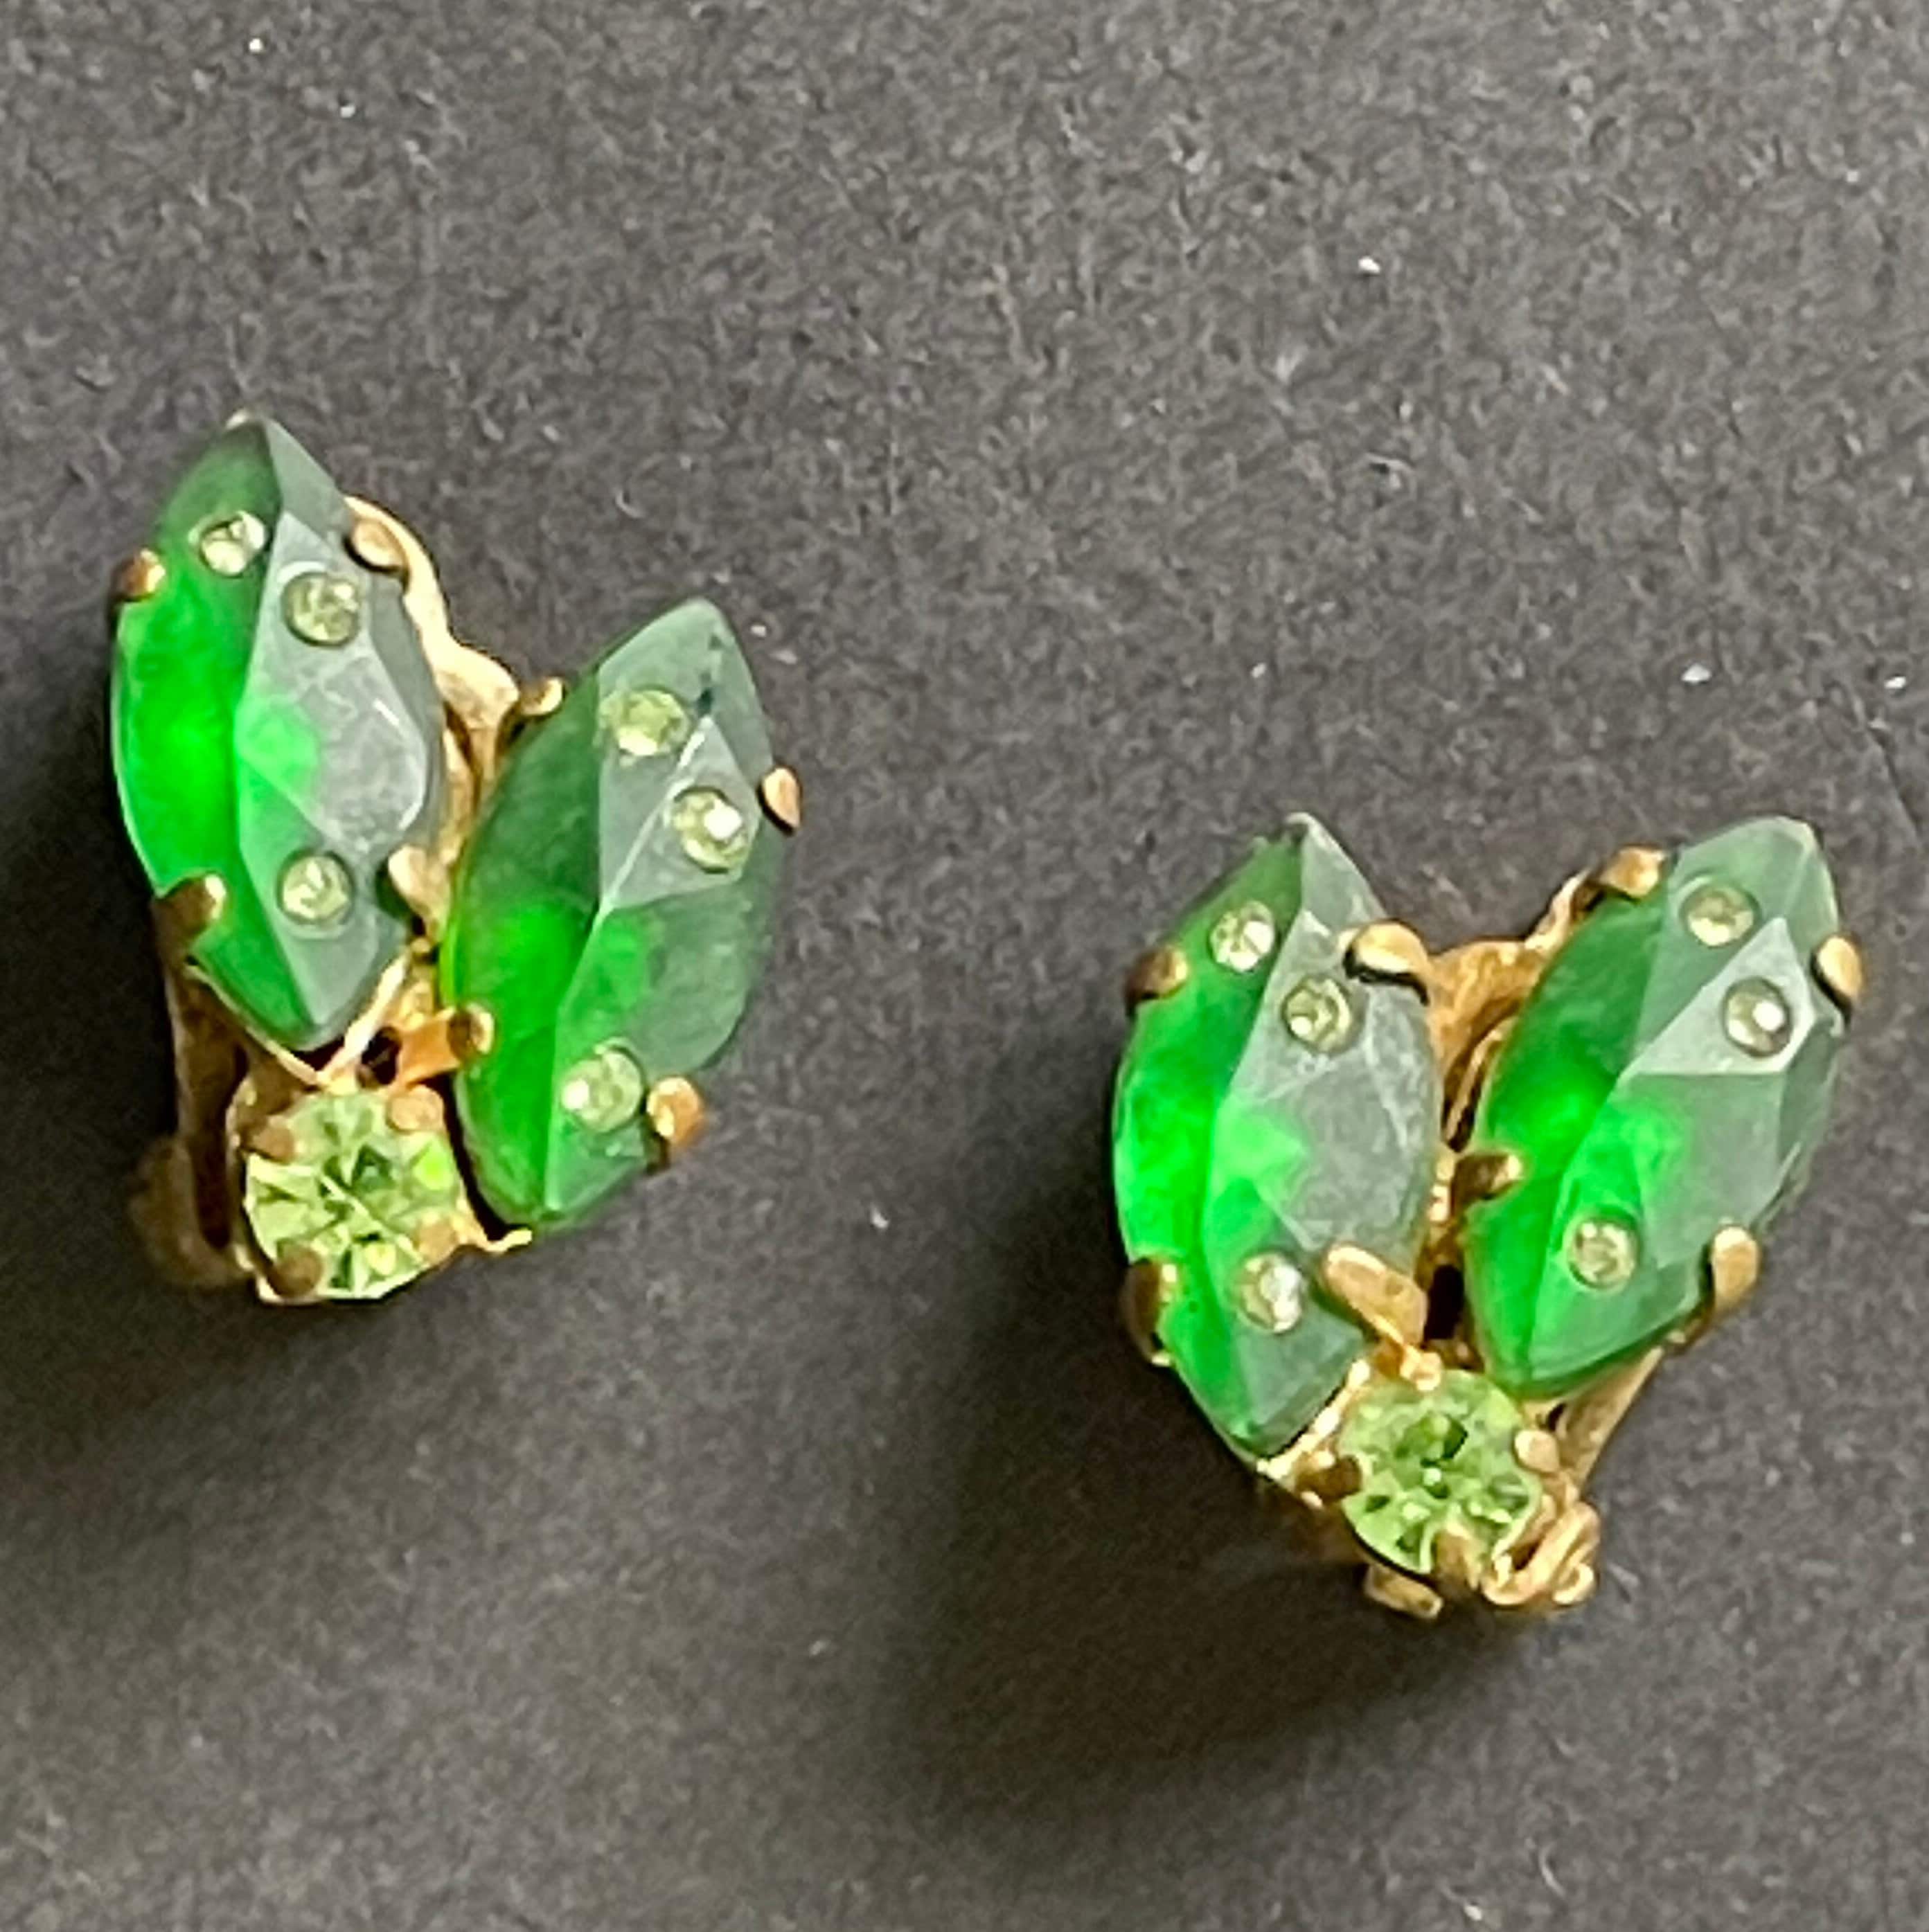 25 Czech glass leaf beads - Matte Peridot, Lime Green AB - large